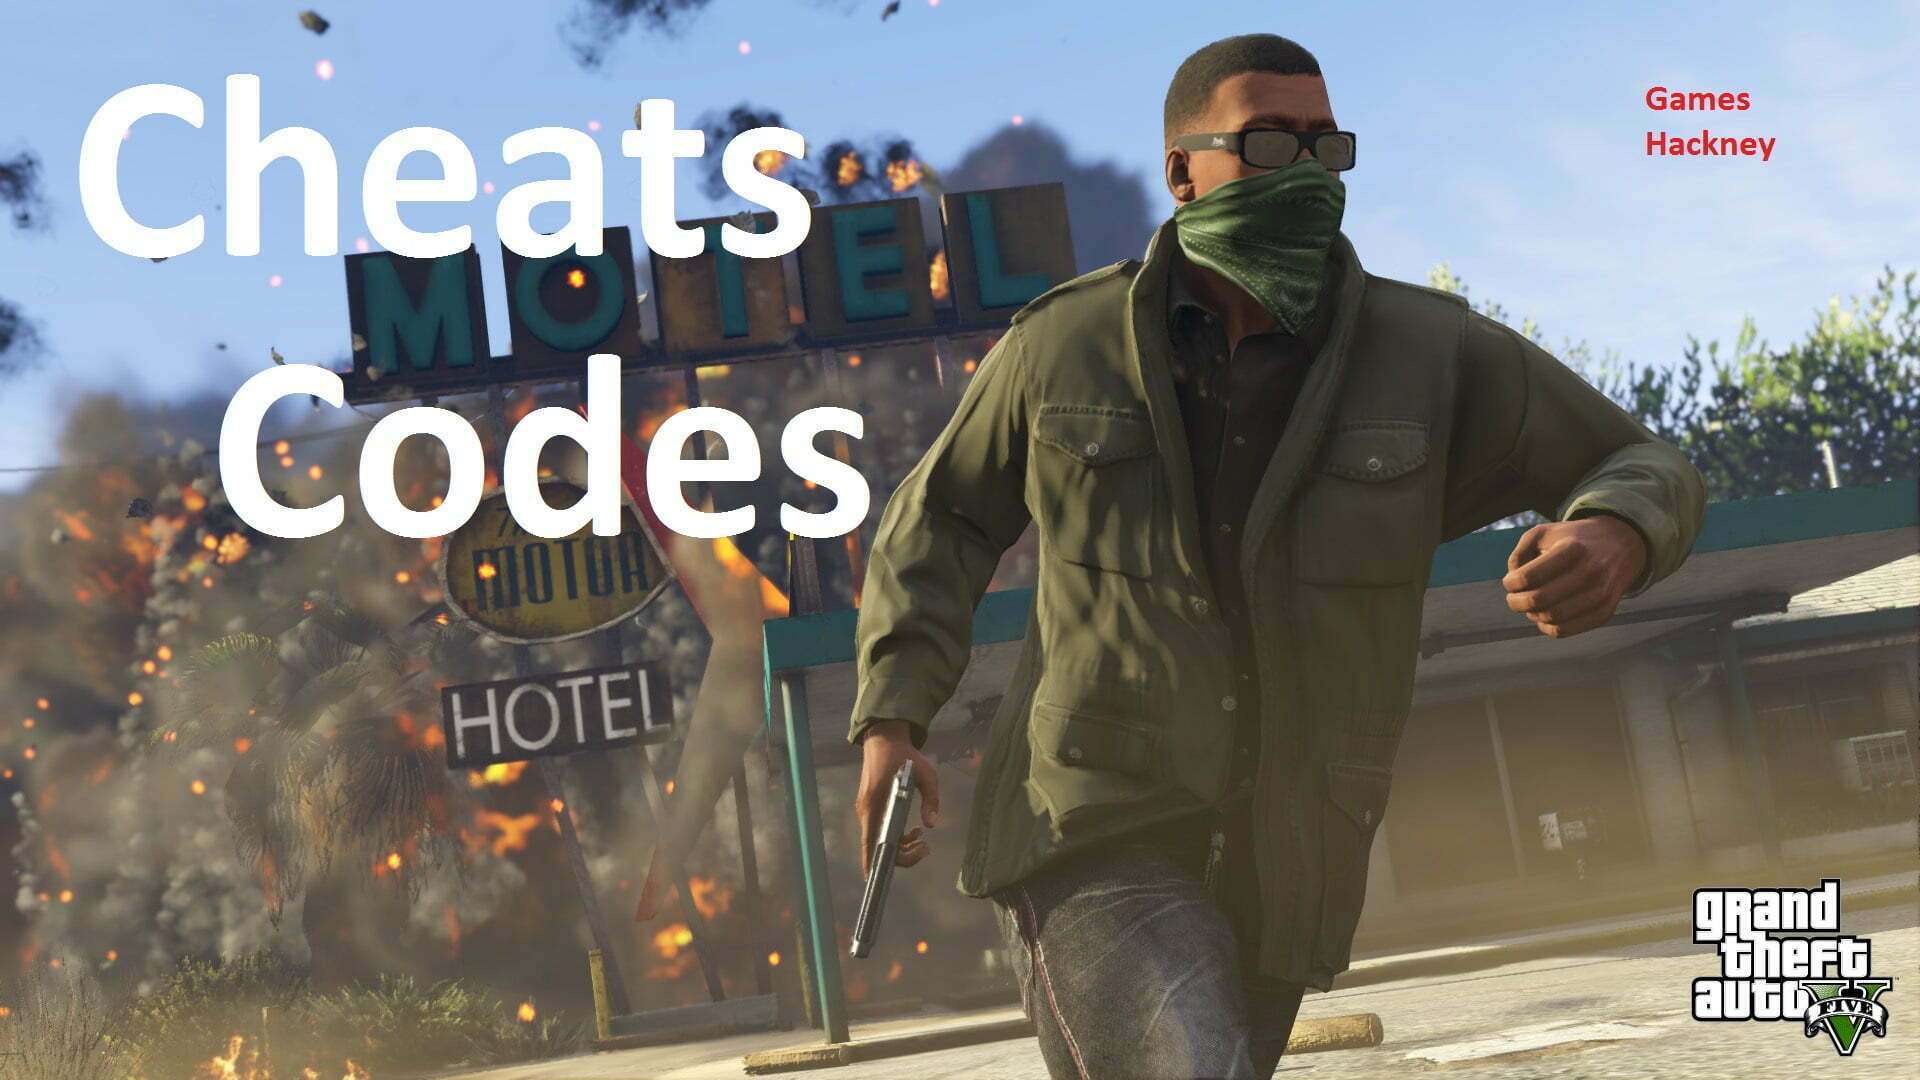 GTA Cheats 2018 - Grand Theft Auto Cheats Codes PC - Games ... - 1920 x 1080 jpeg 567kB